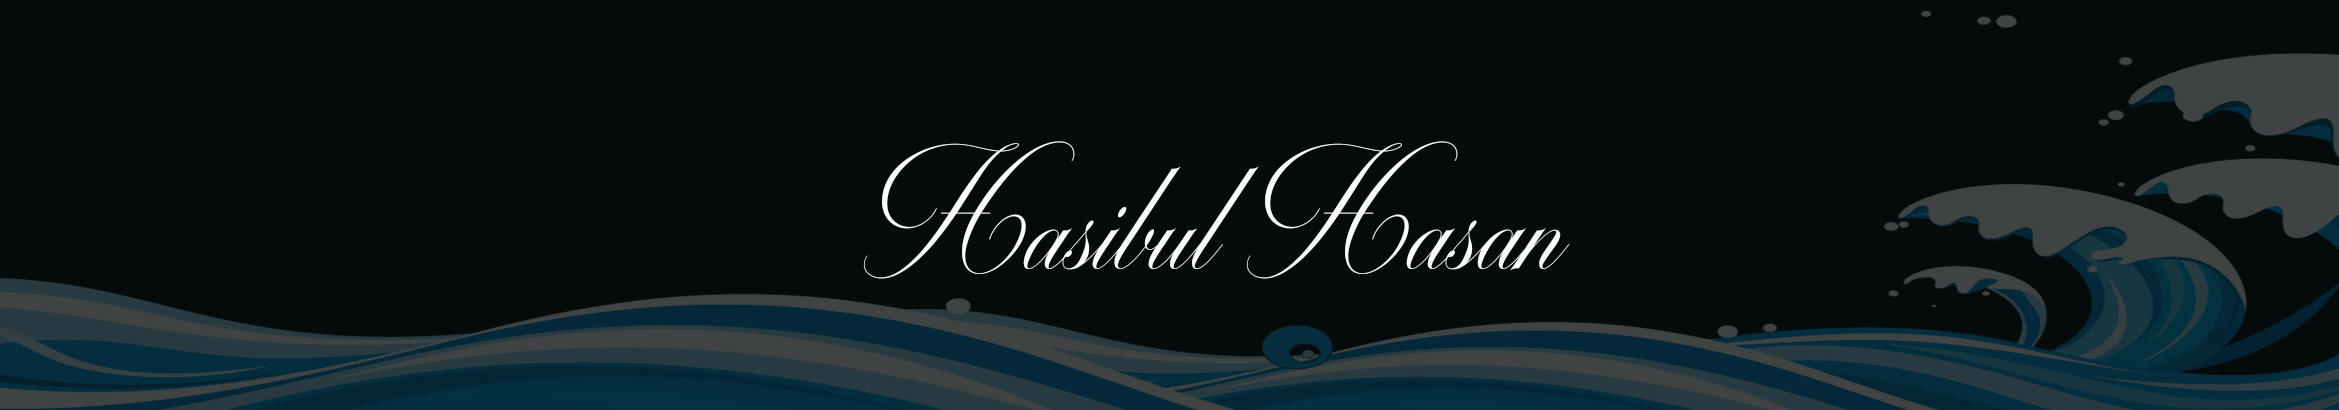 Hasibul Hasan's profile banner